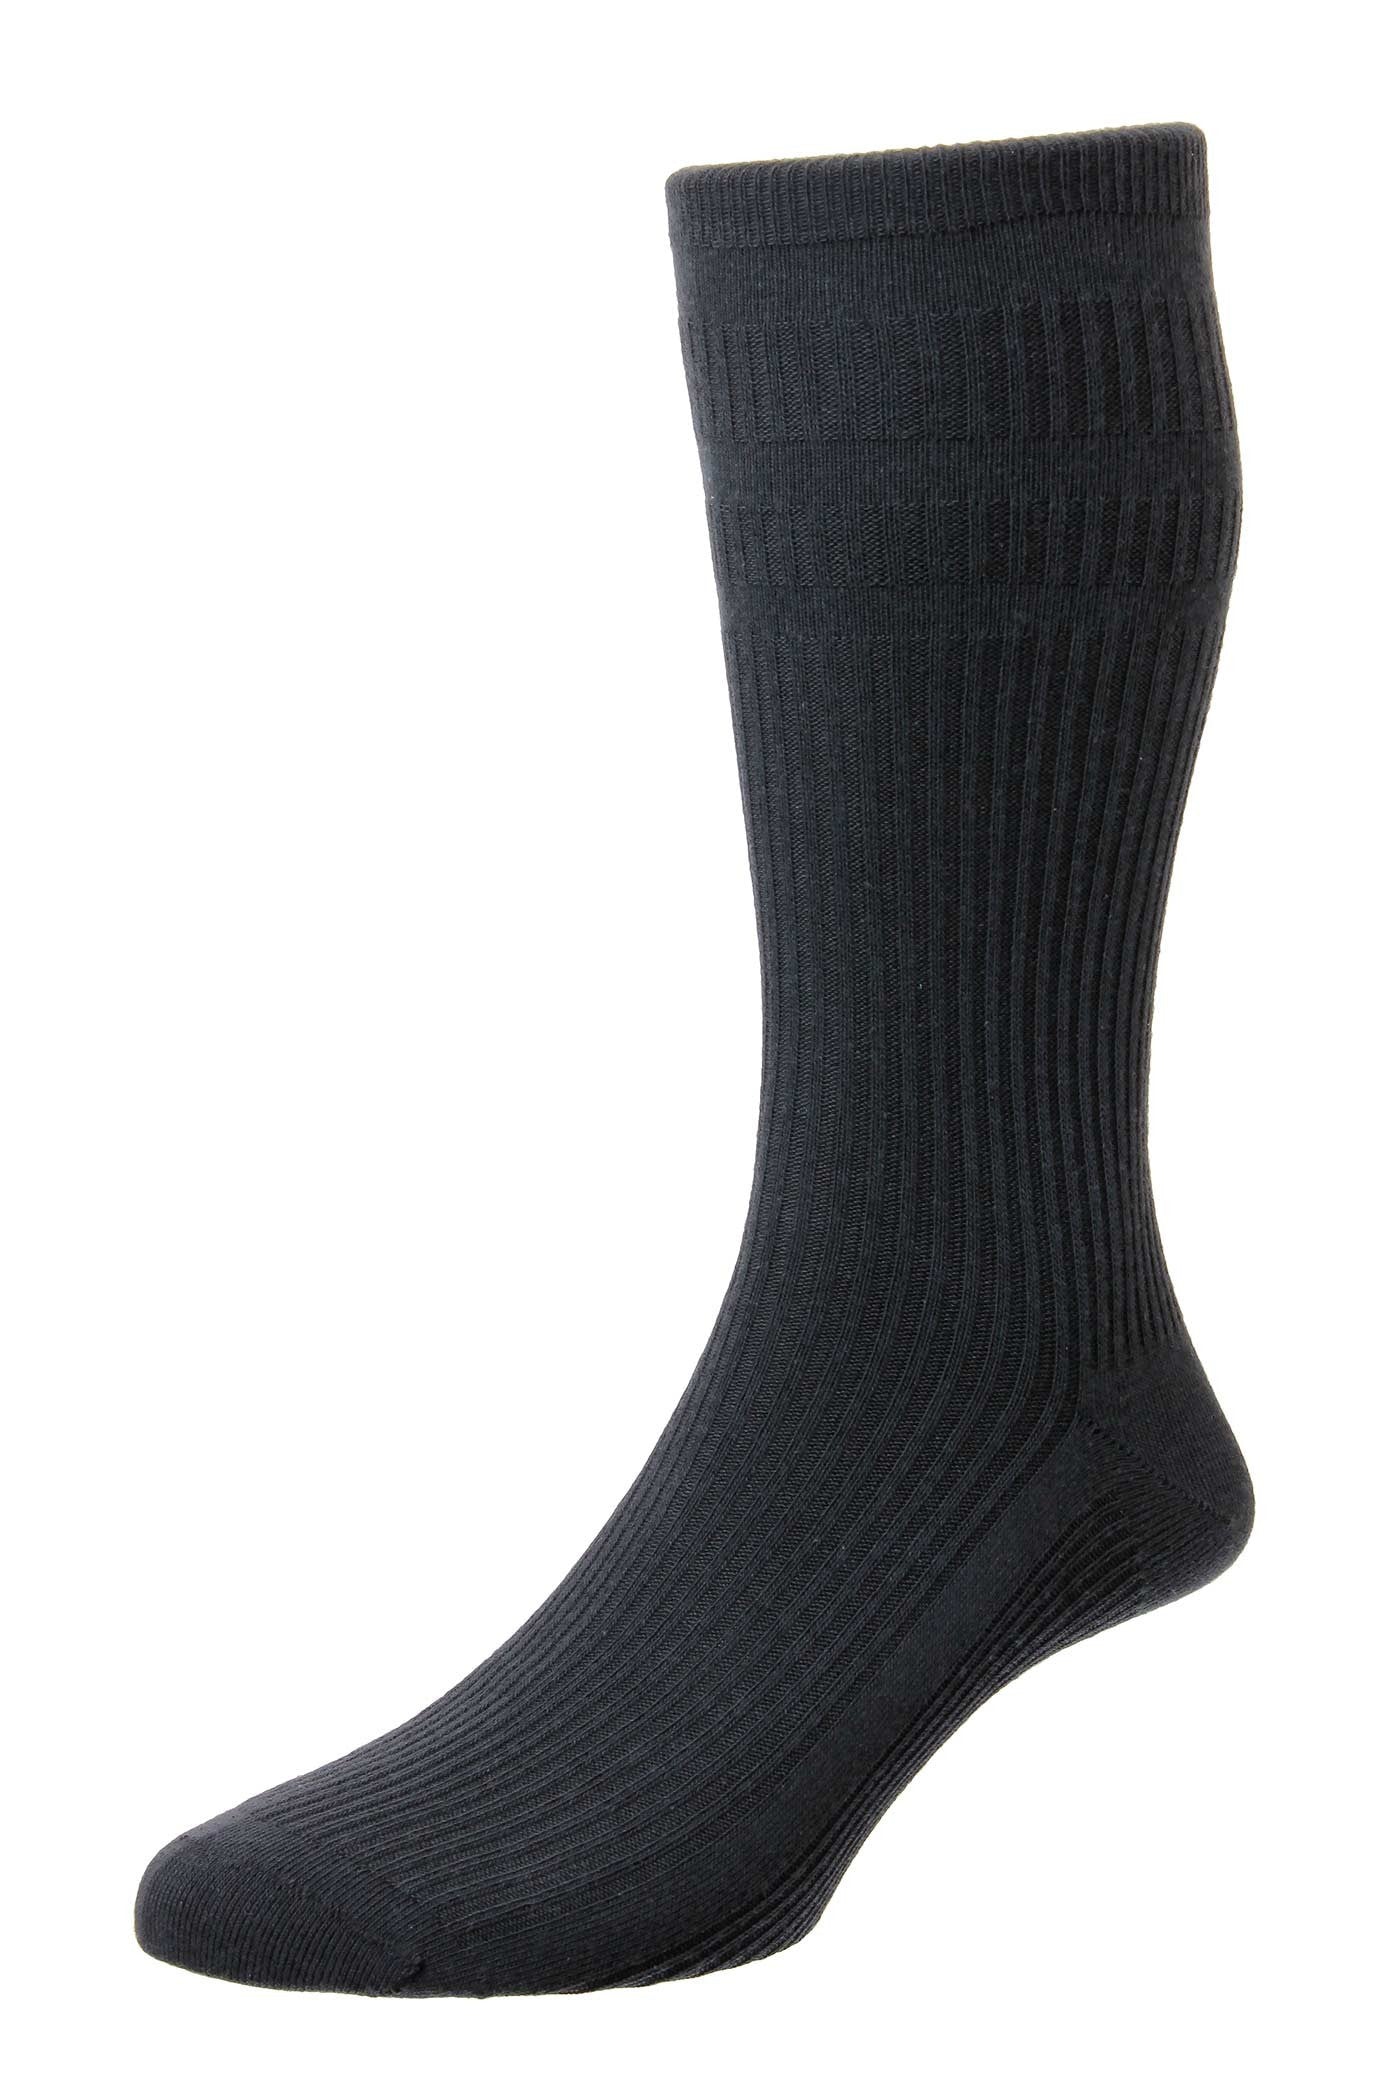 HJ Hall Cotton SoftTop Socks Charcoal